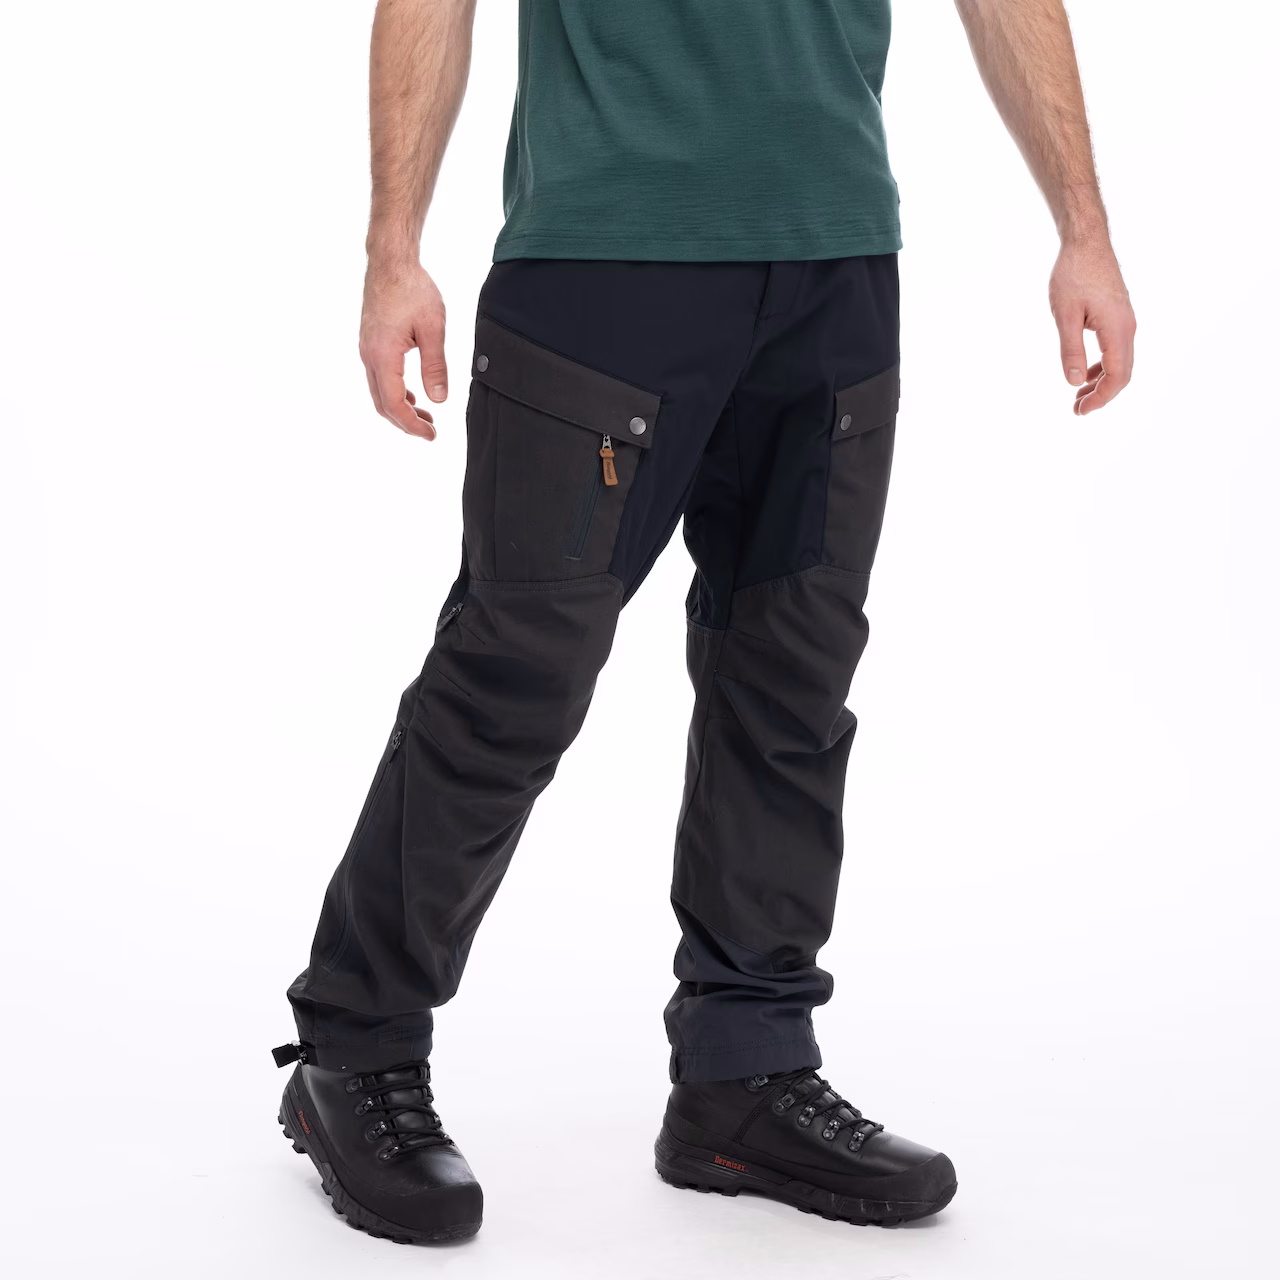 Men's Ultra-Thin Hiking Pants - AdventureHacks